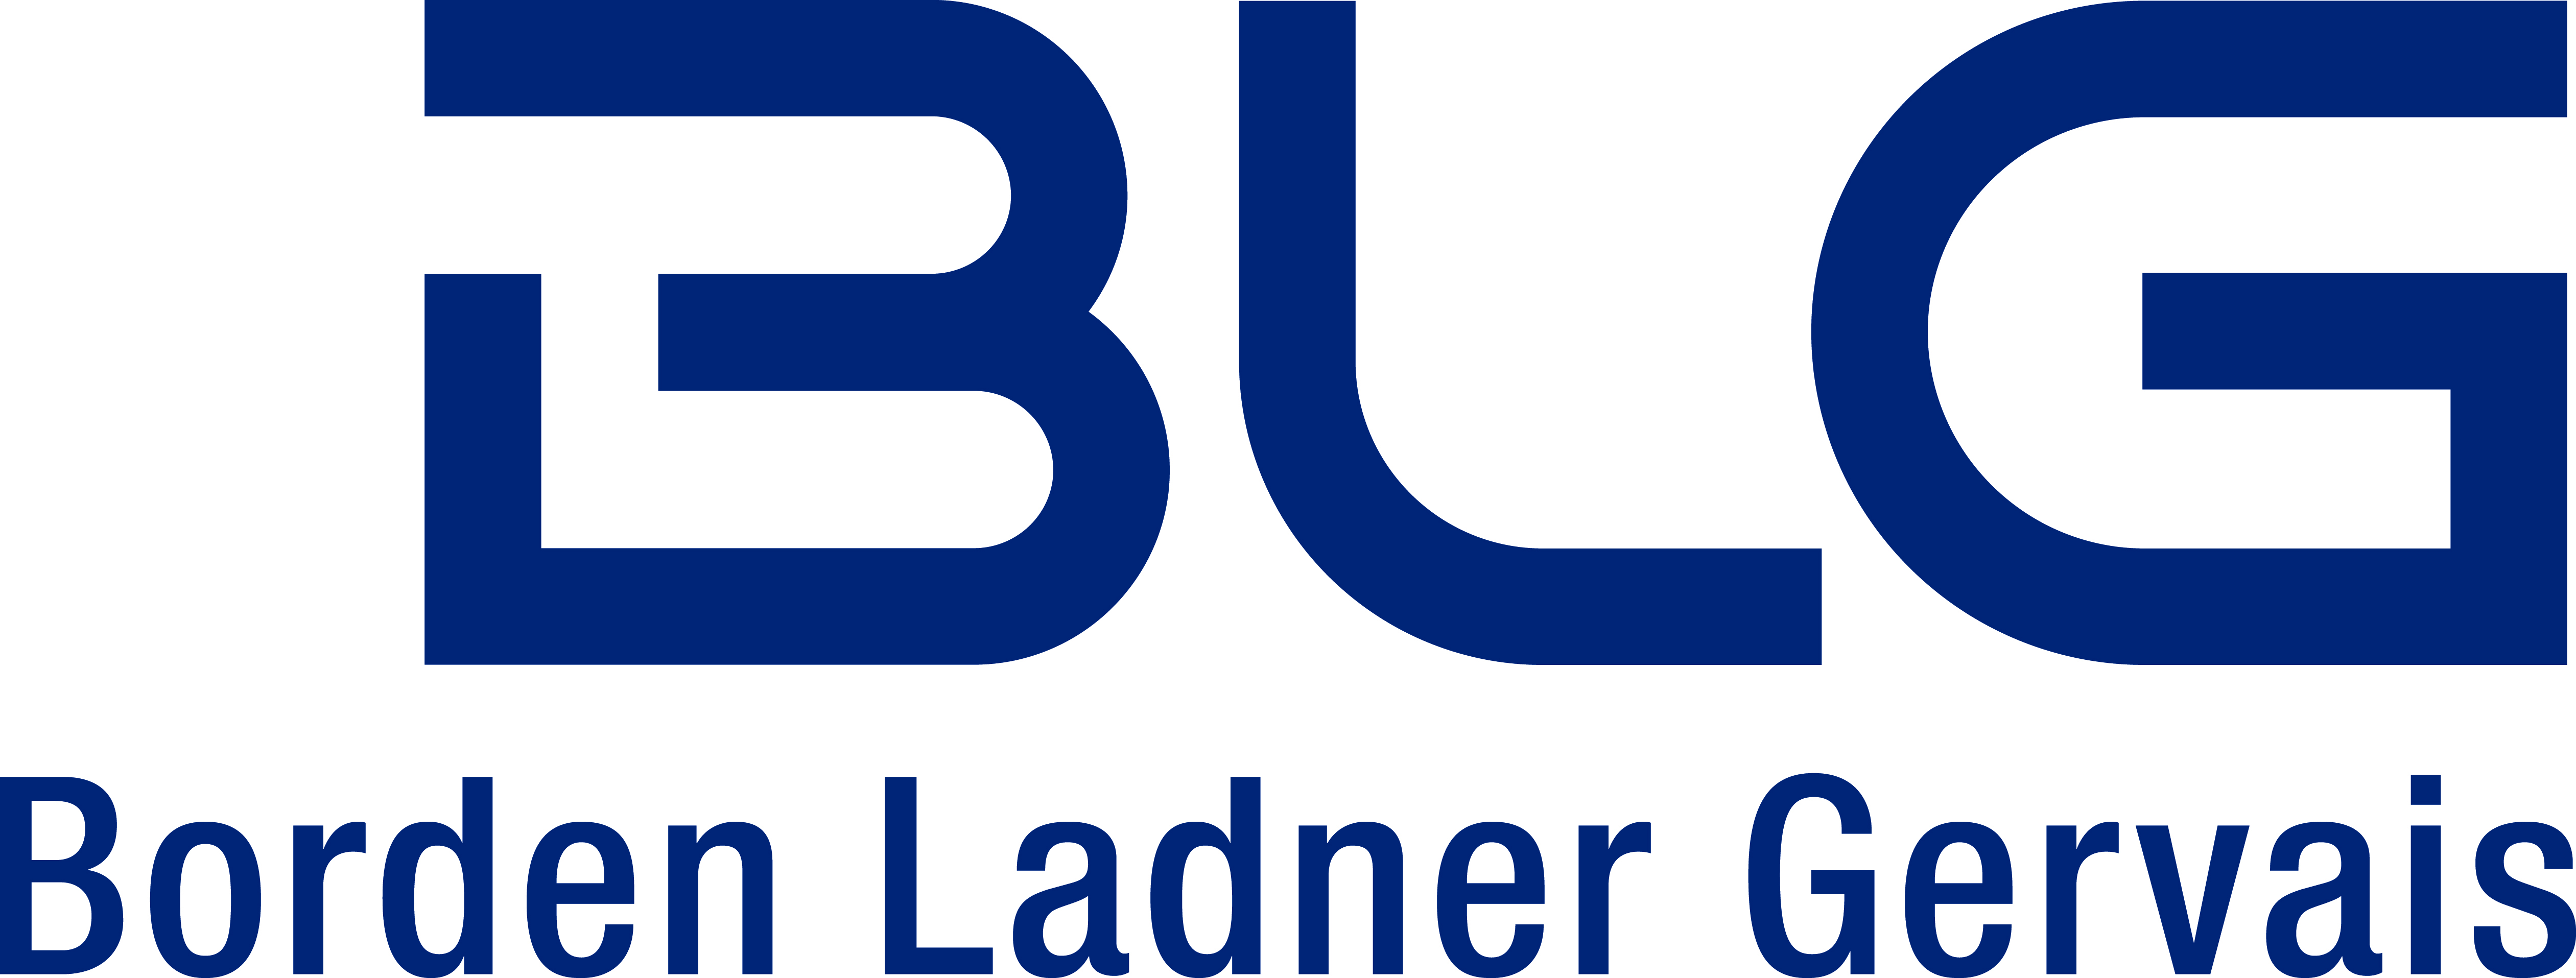 BLG Logo CMYK BLUE HR